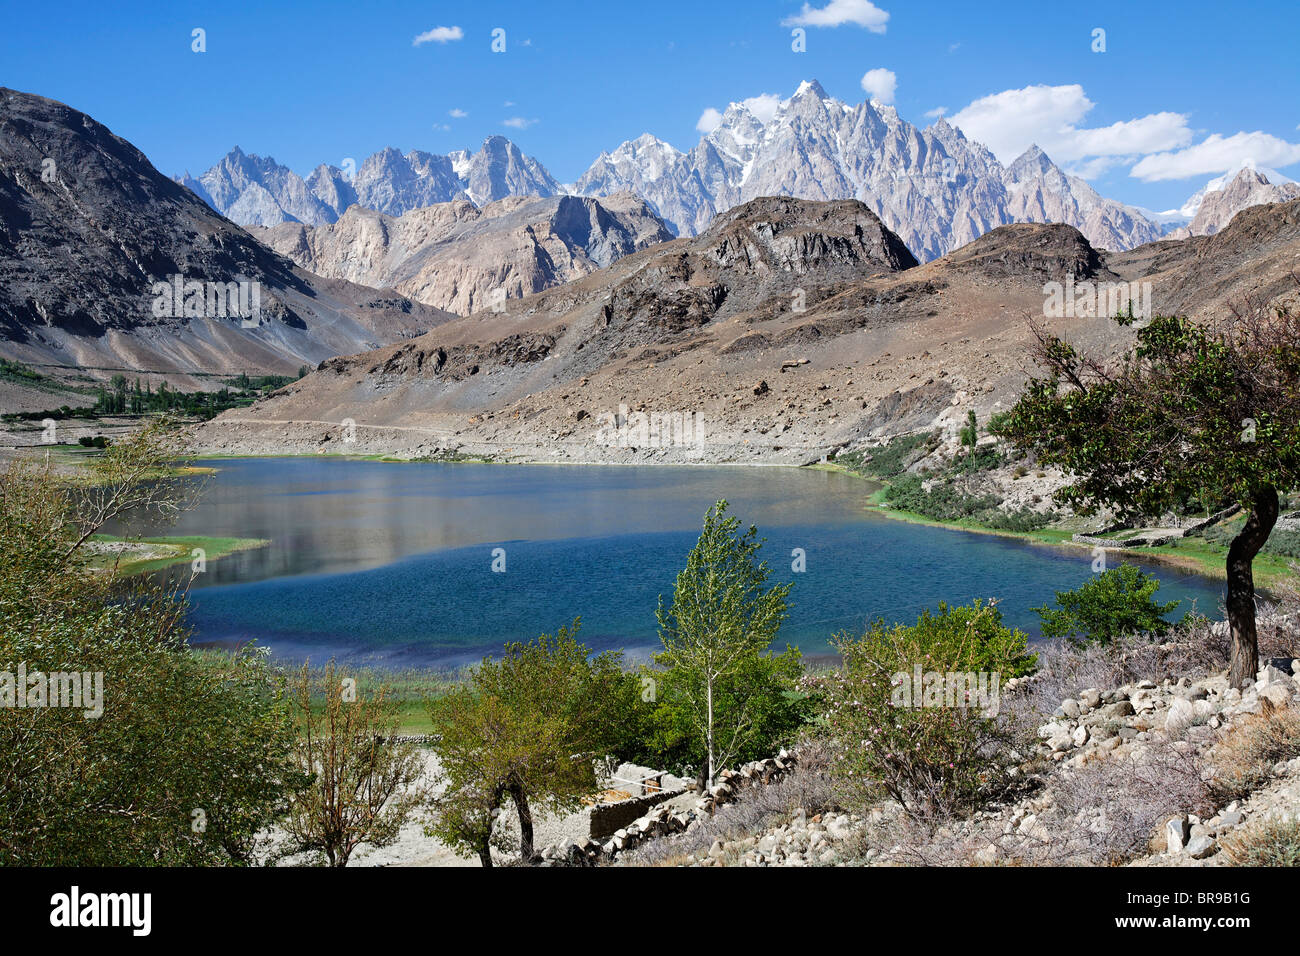 Borith Lake and mountains, Passu, Hunza Valley, Karakorum, Pakistan Stock Photo